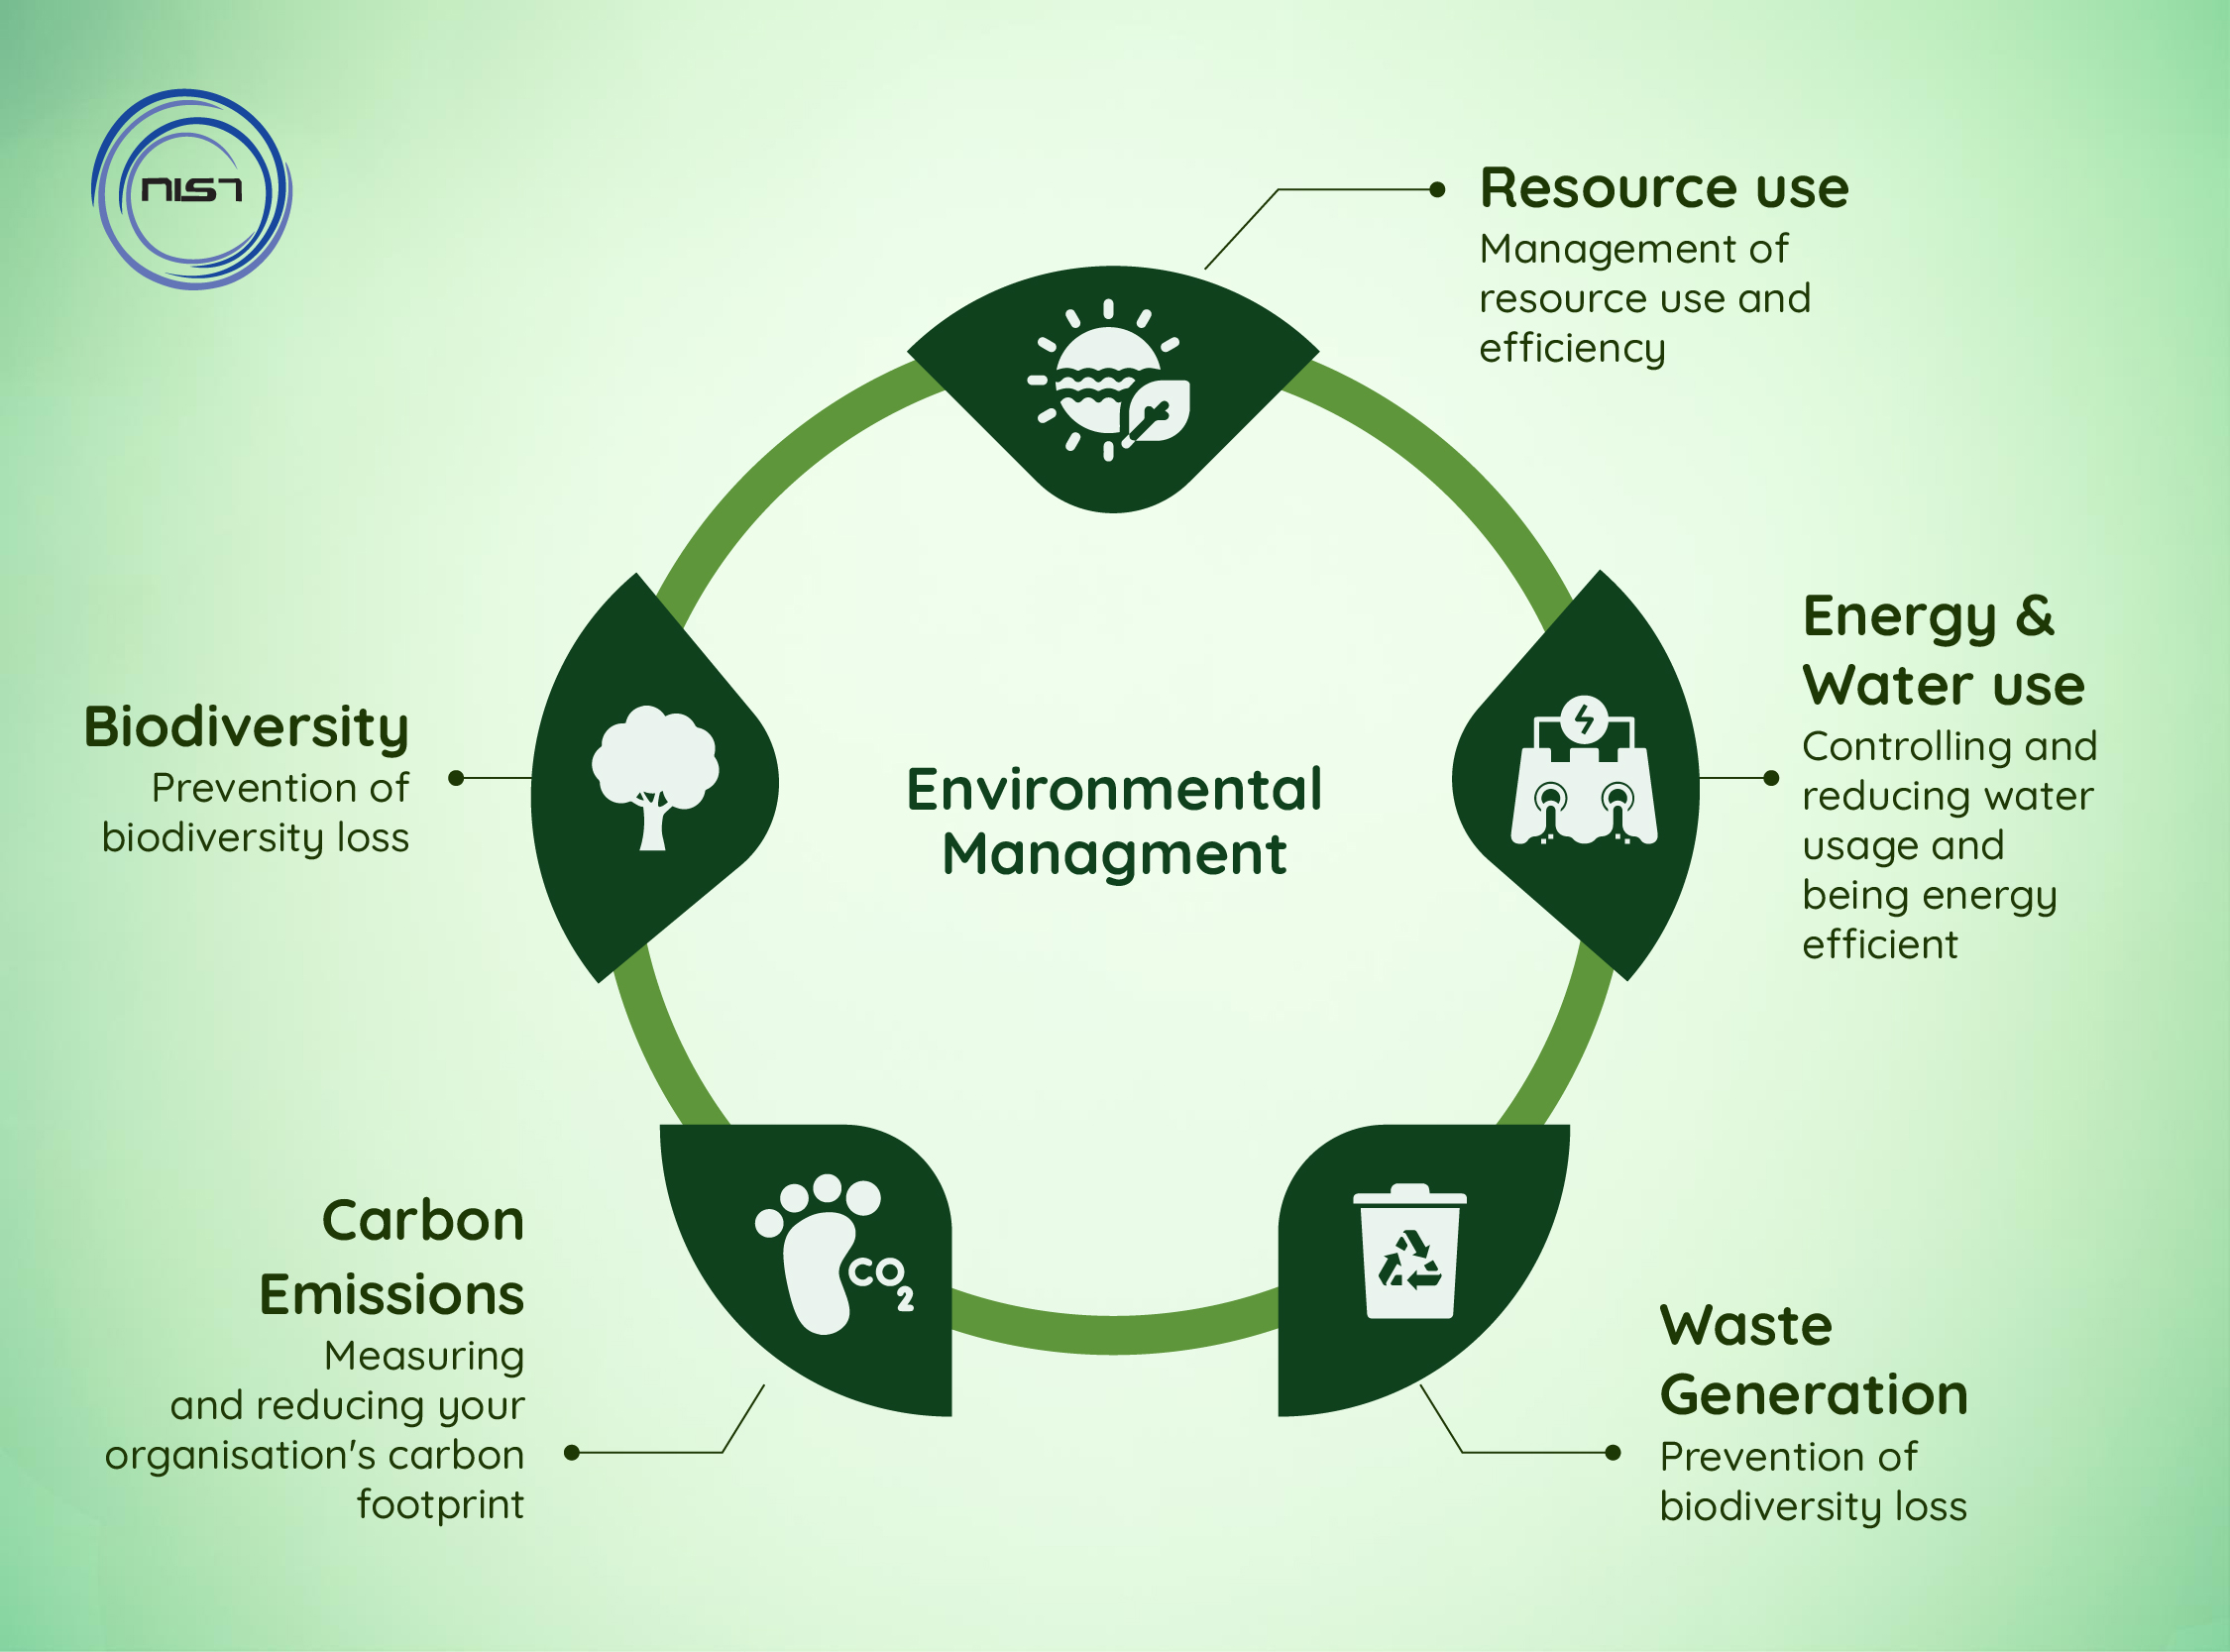 environmental project management methodology